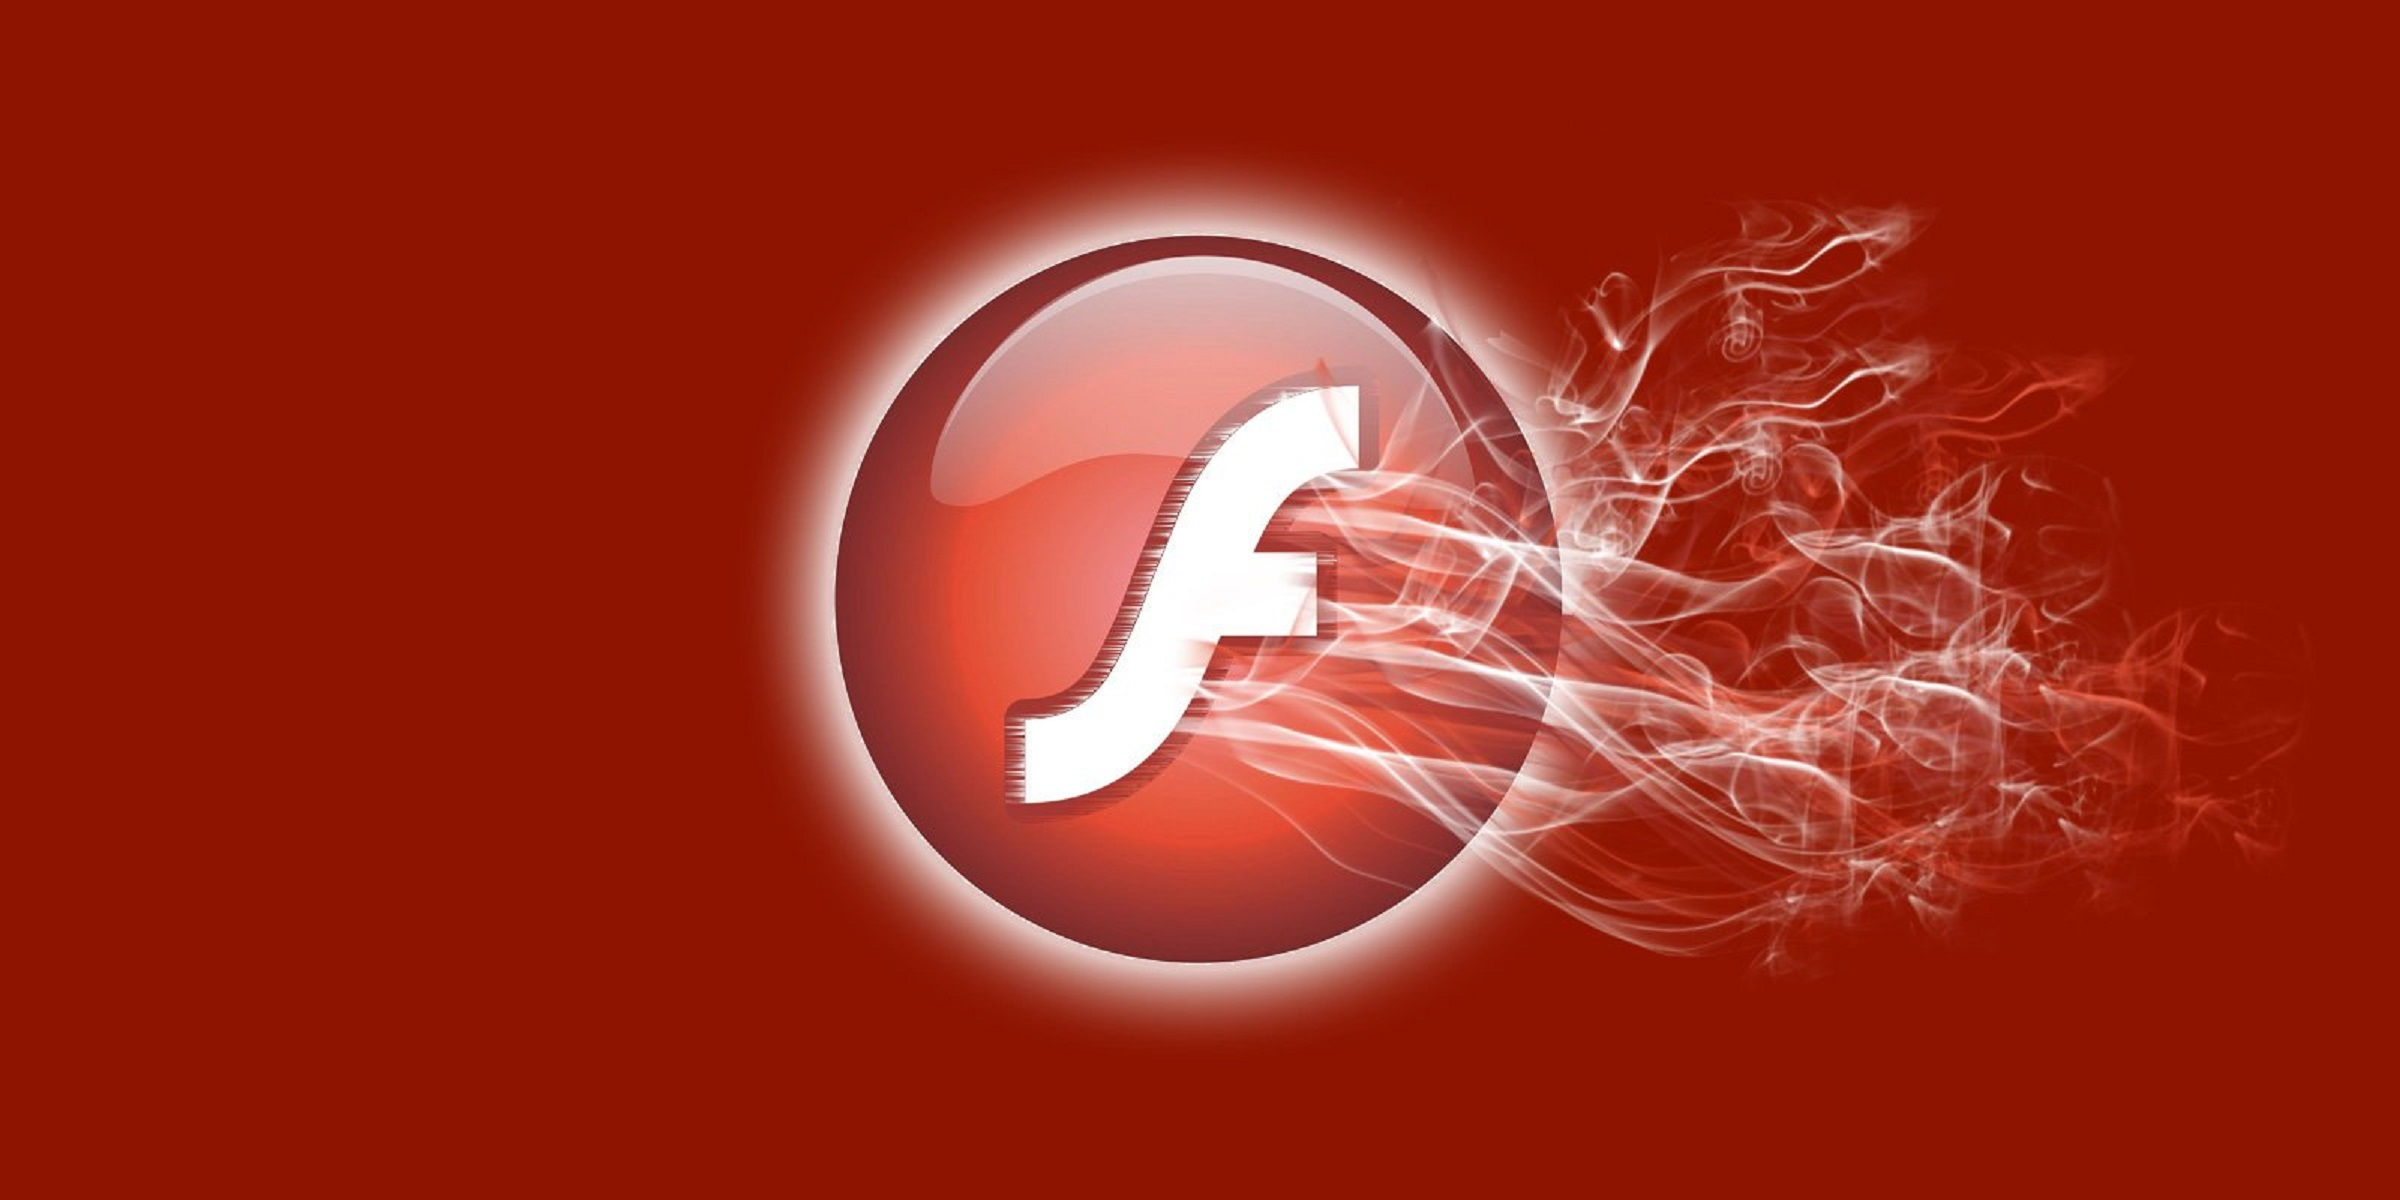 what is adobe flash reader